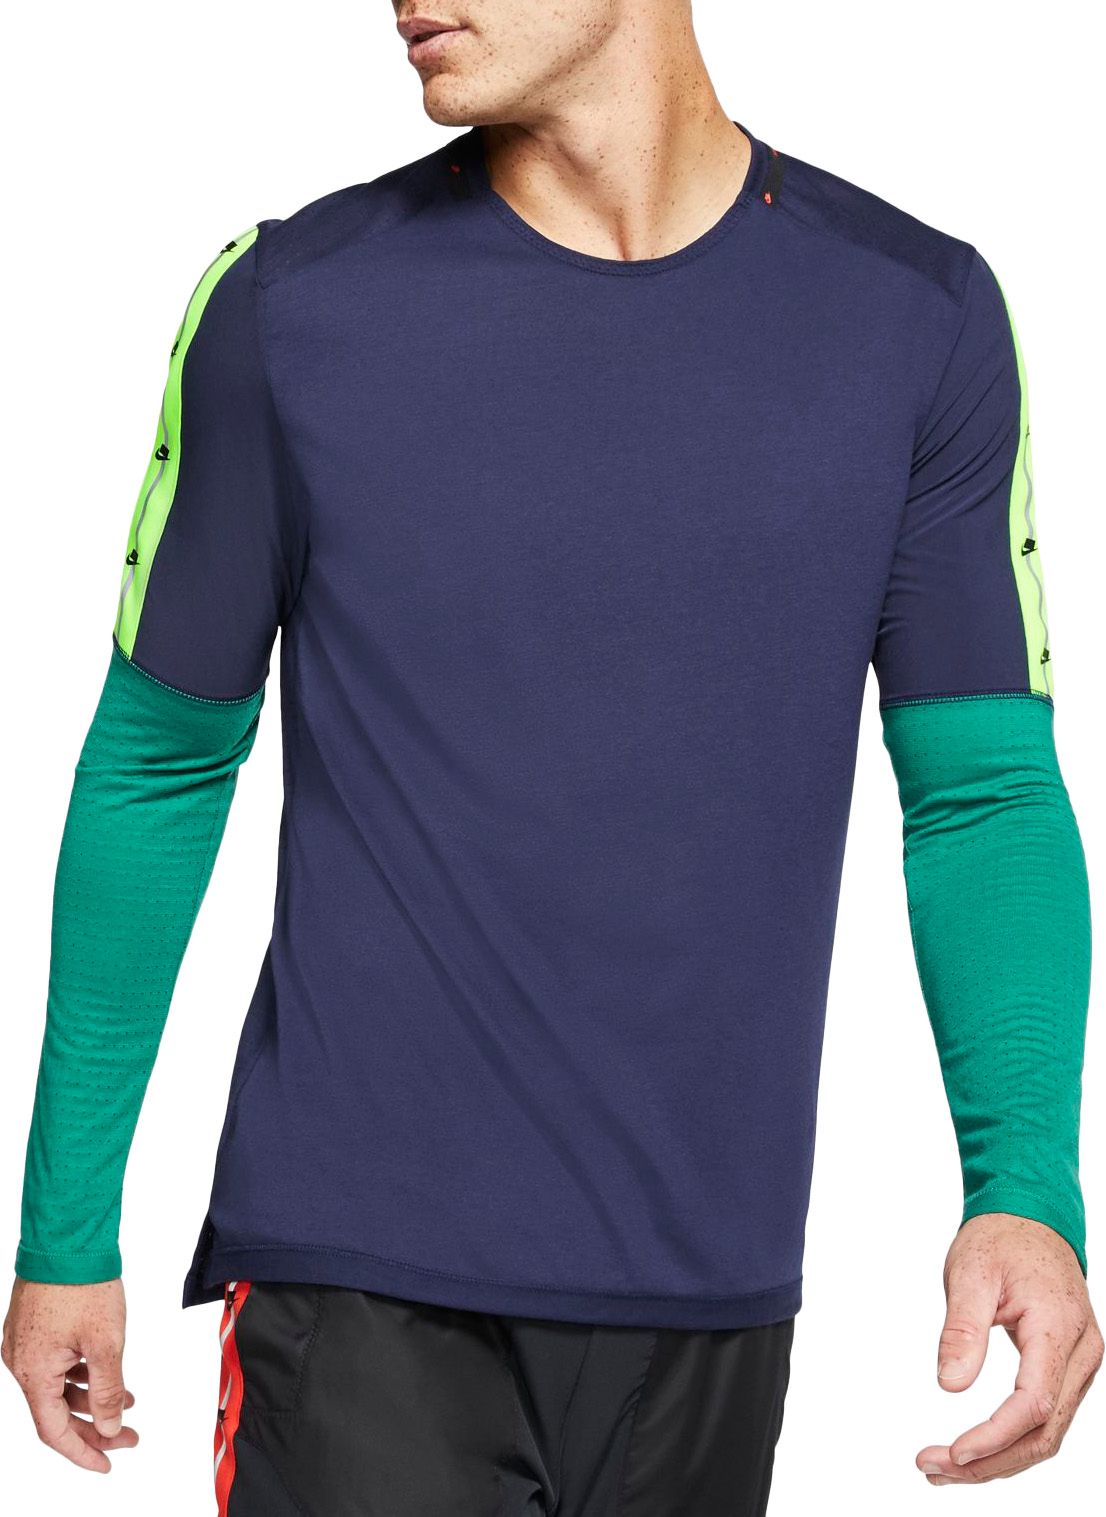 Nike Men's Running Long Sleeve Shirt - .97